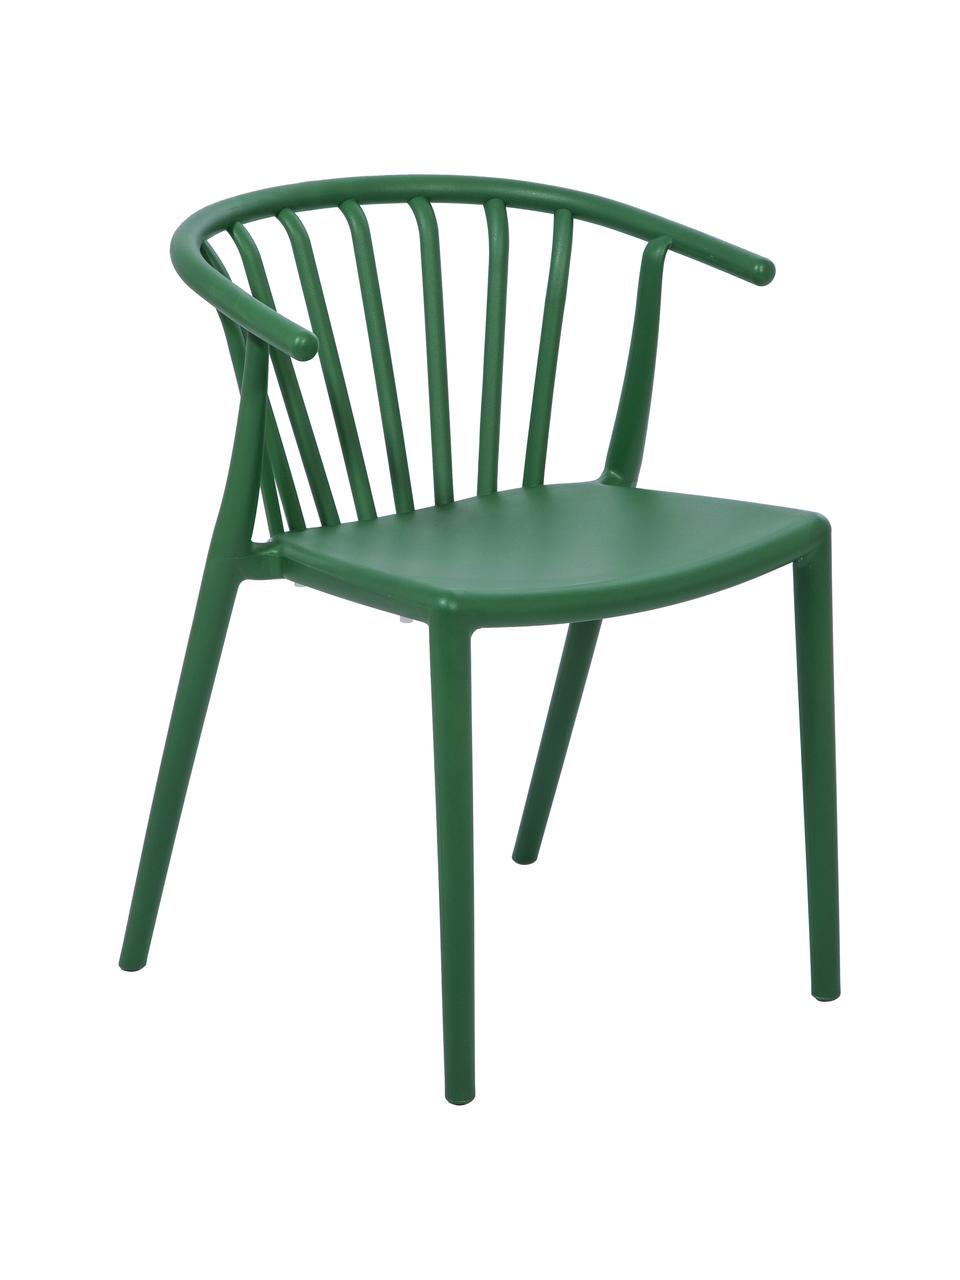 Chaise de jardin verte, empilable Capri, Polypropylène, Vert, larg. 53 x prof. 55 cm